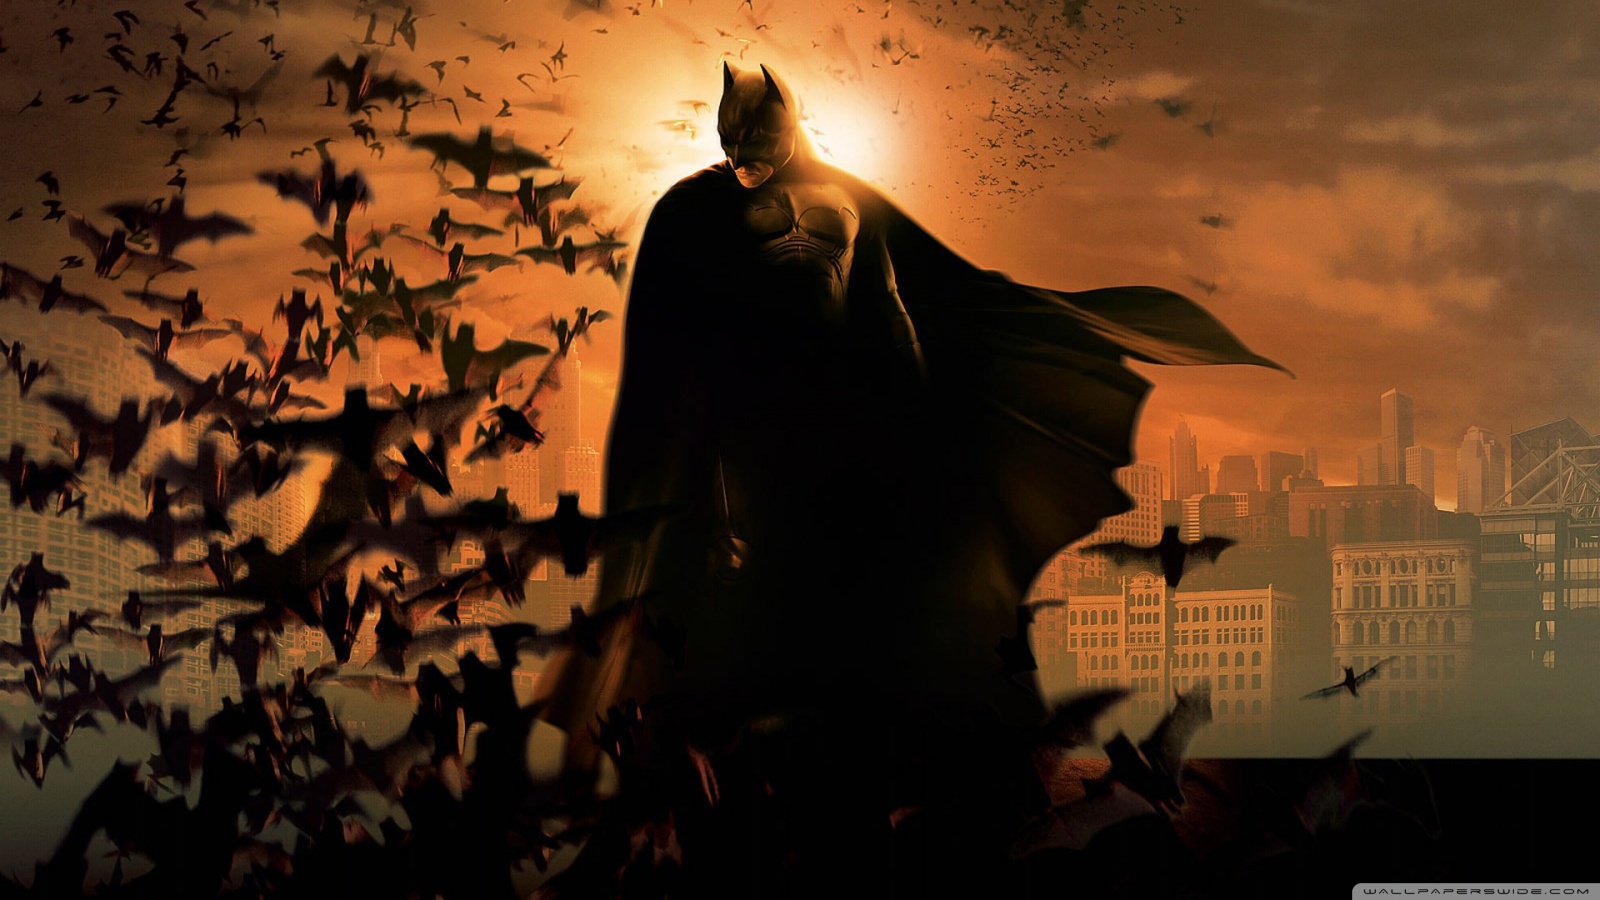 Batman 3 The Dark Knight Rises HD desktop wallpaper Widescreen